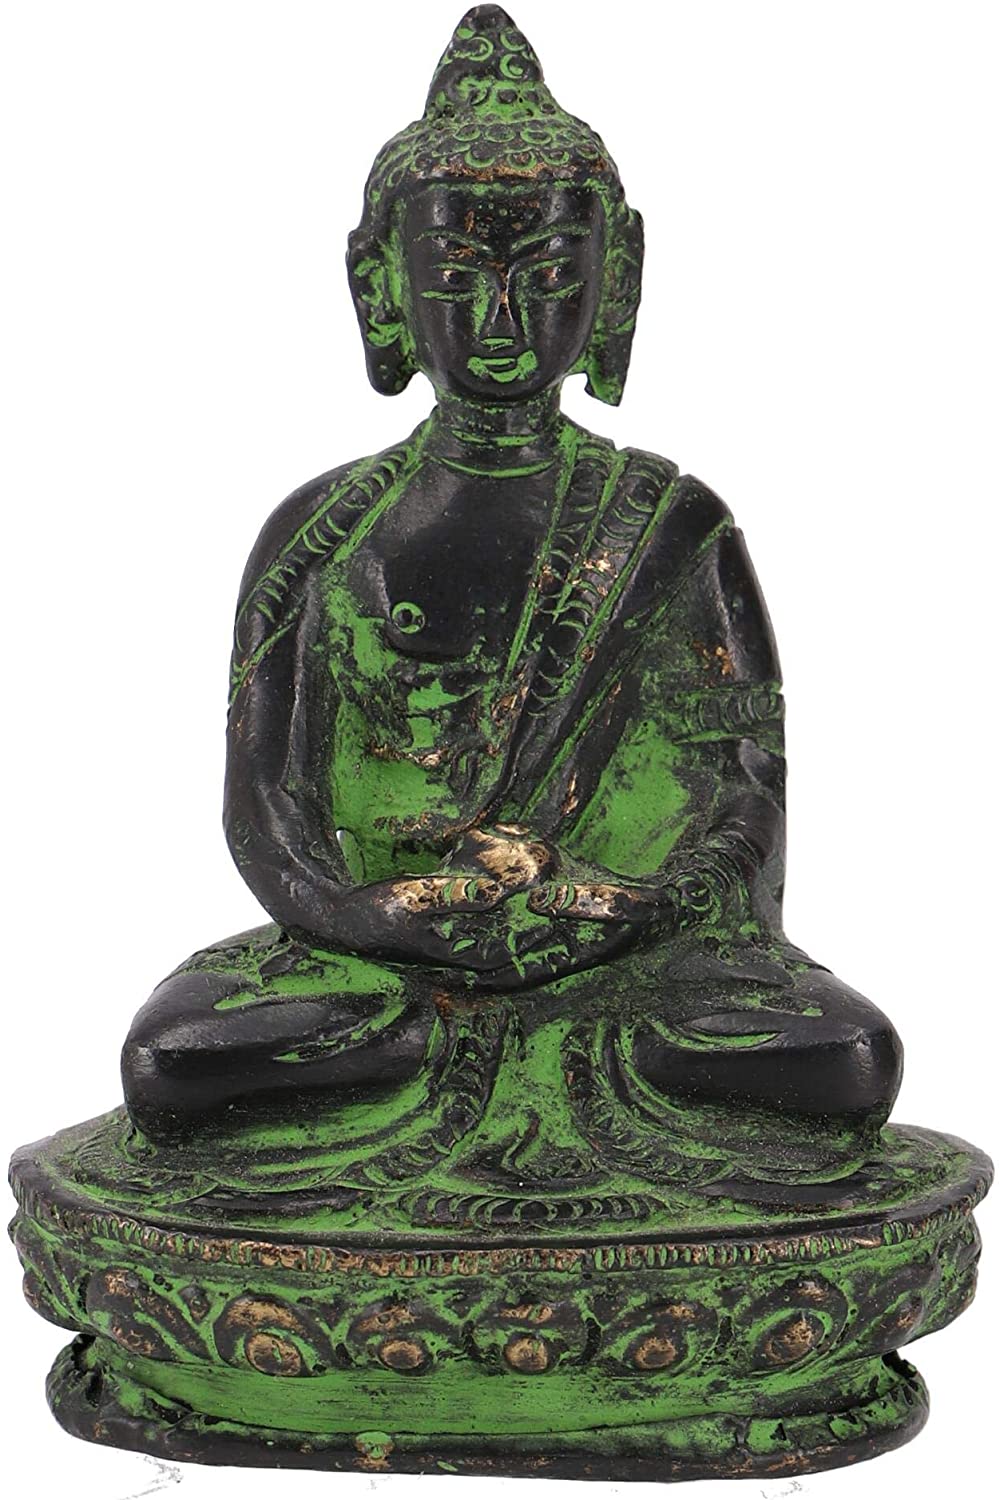 GURU SHOP Buddha Statue Brass Dhyana Mudra 8 cm - Model 10, Green Buddha